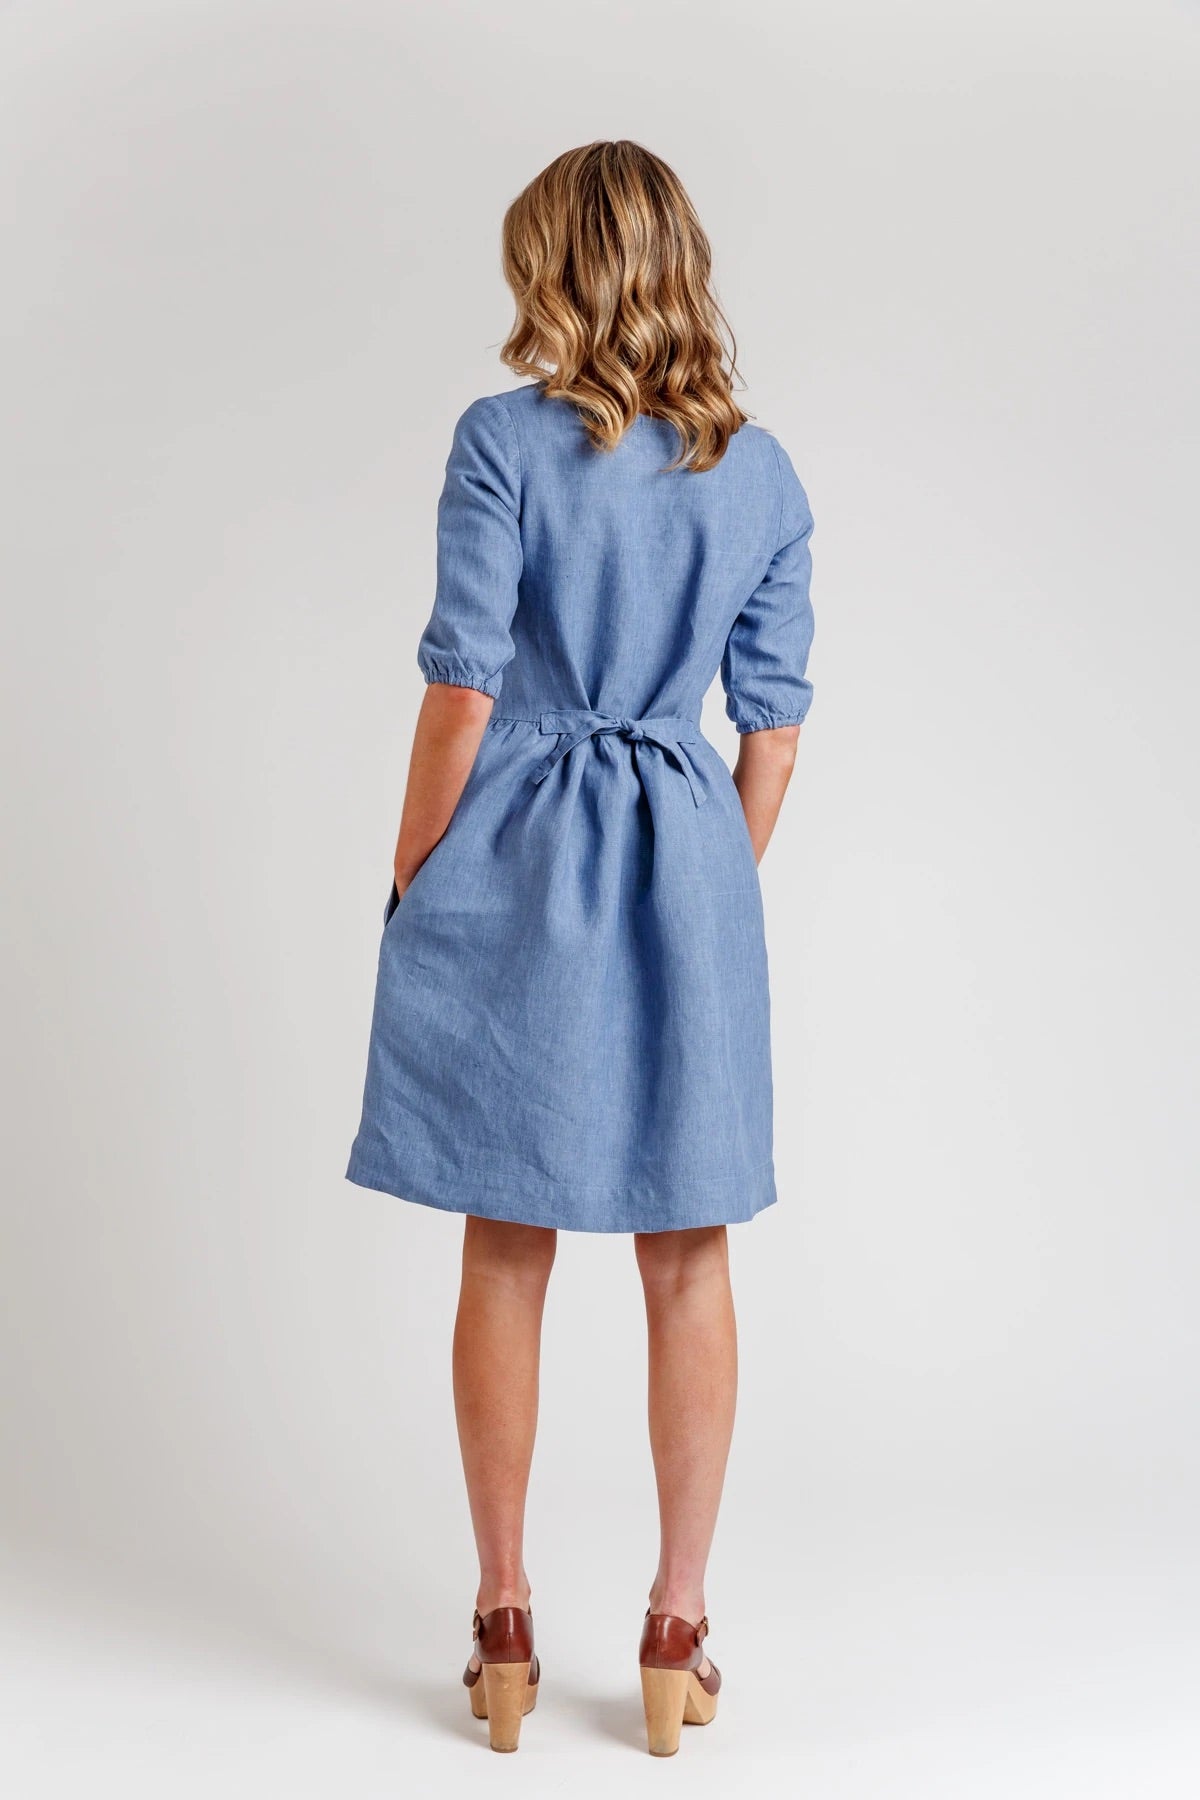 Megan Nielsen - Darling Ranges Dress & Blouse Sewing Pattern